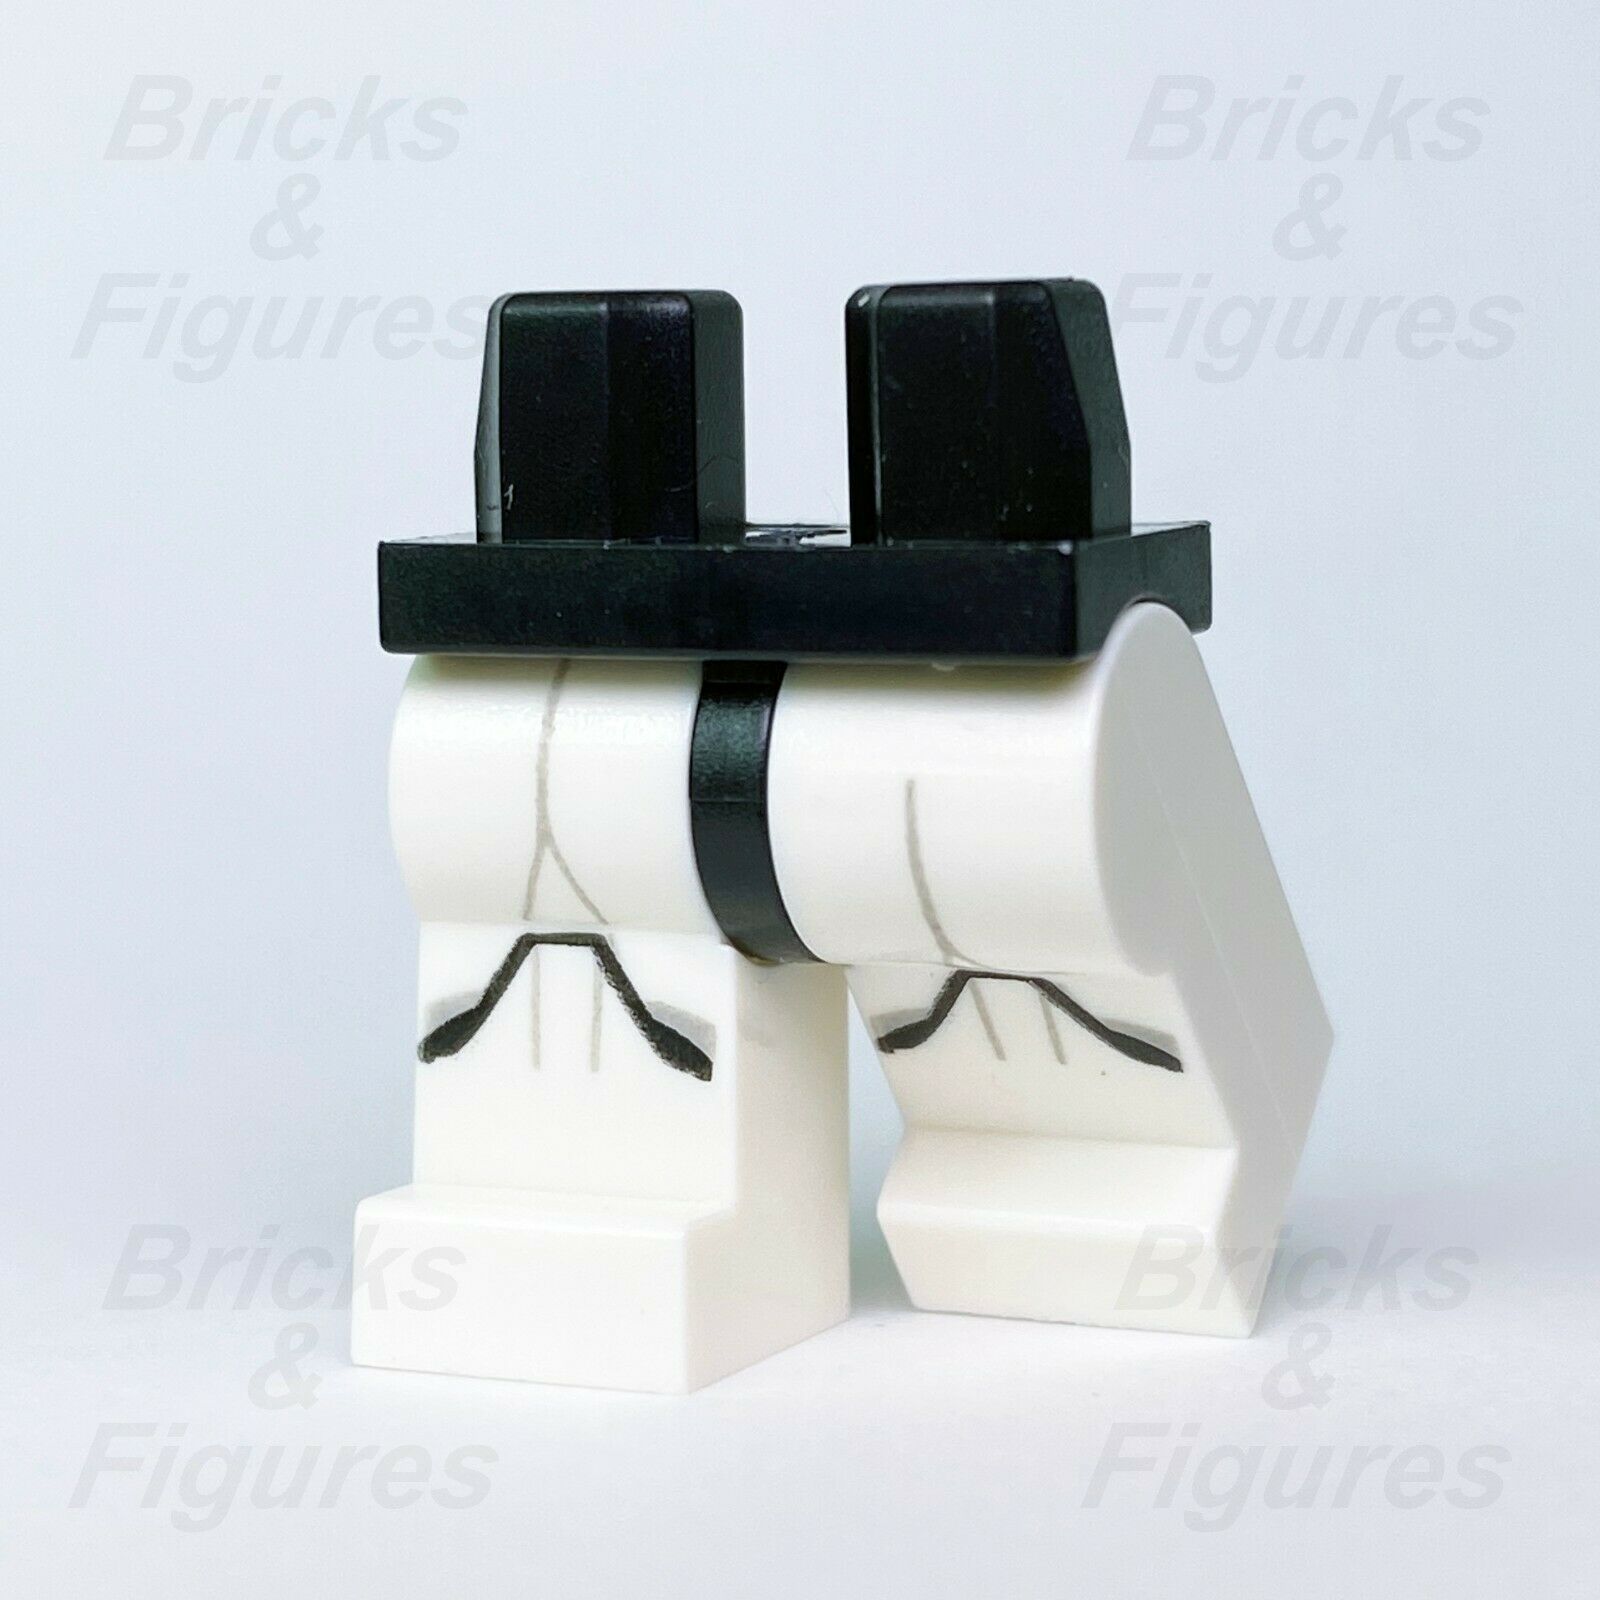 Star Wars LEGO Clone Trooper Printed Legs Minifigure Part 75028 75085 75206 - Bricks & Figures